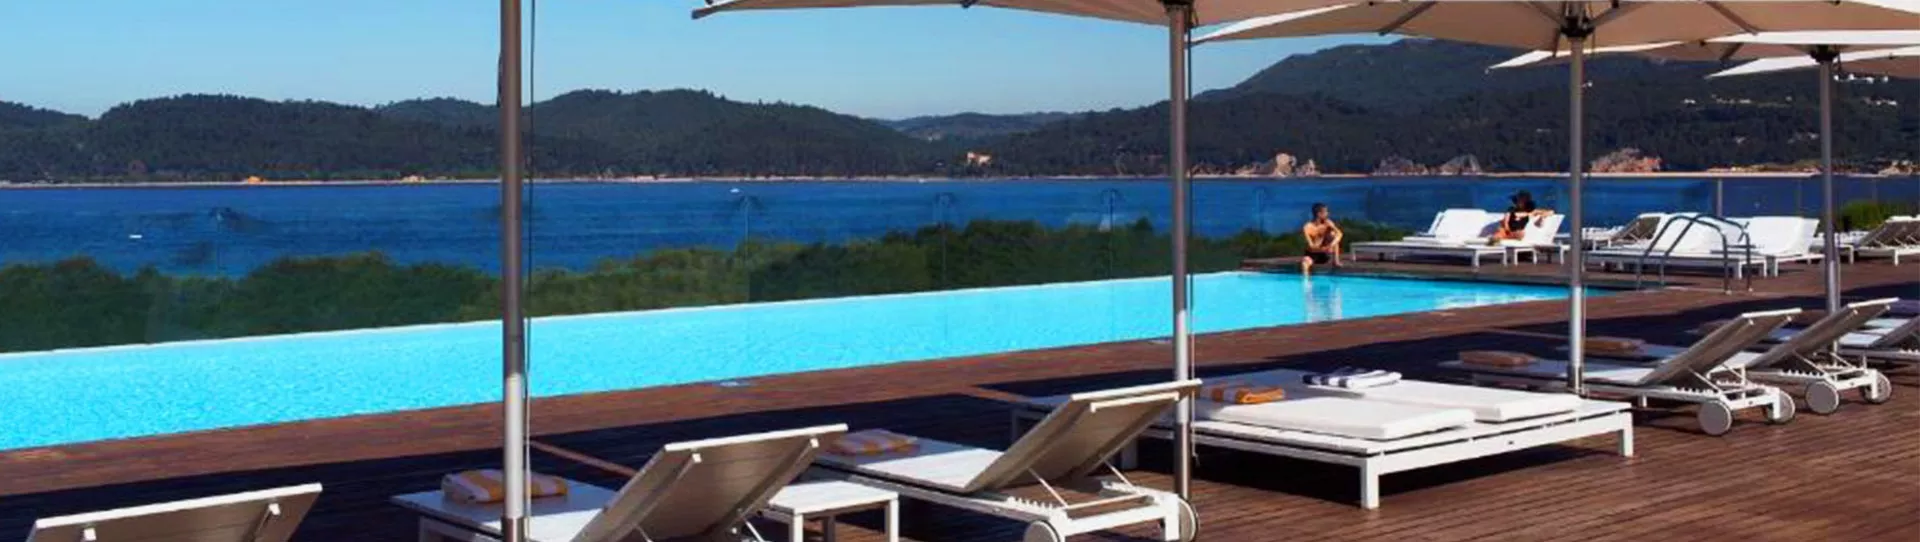 Portugal golf holidays - Troia Design Hotel - Photo 1